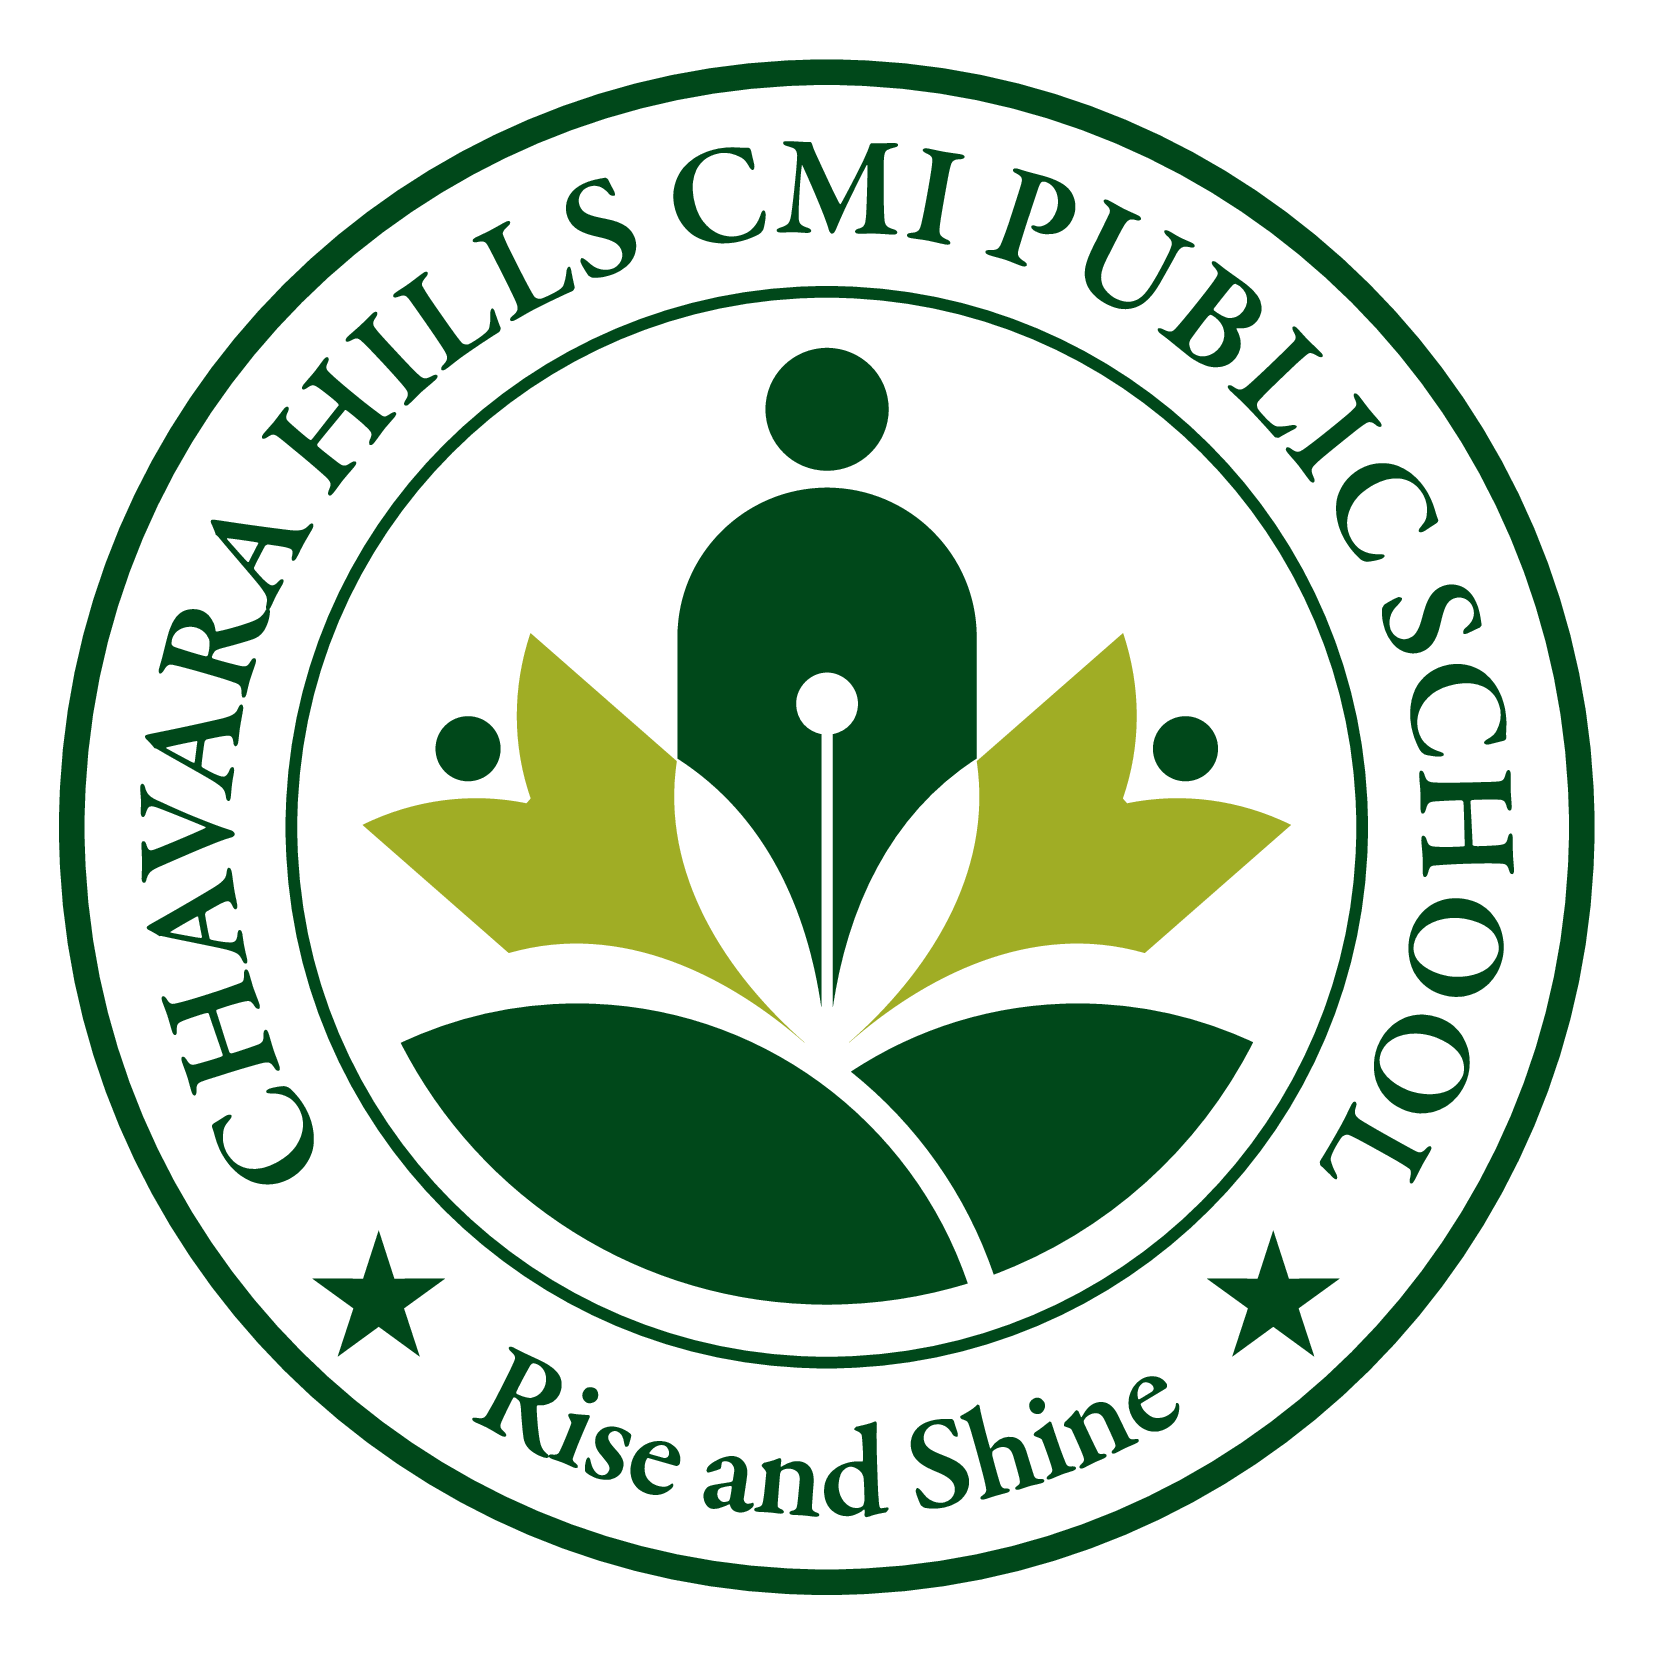 CHAVARA HILLS CMI PUBLIC SCHOOL